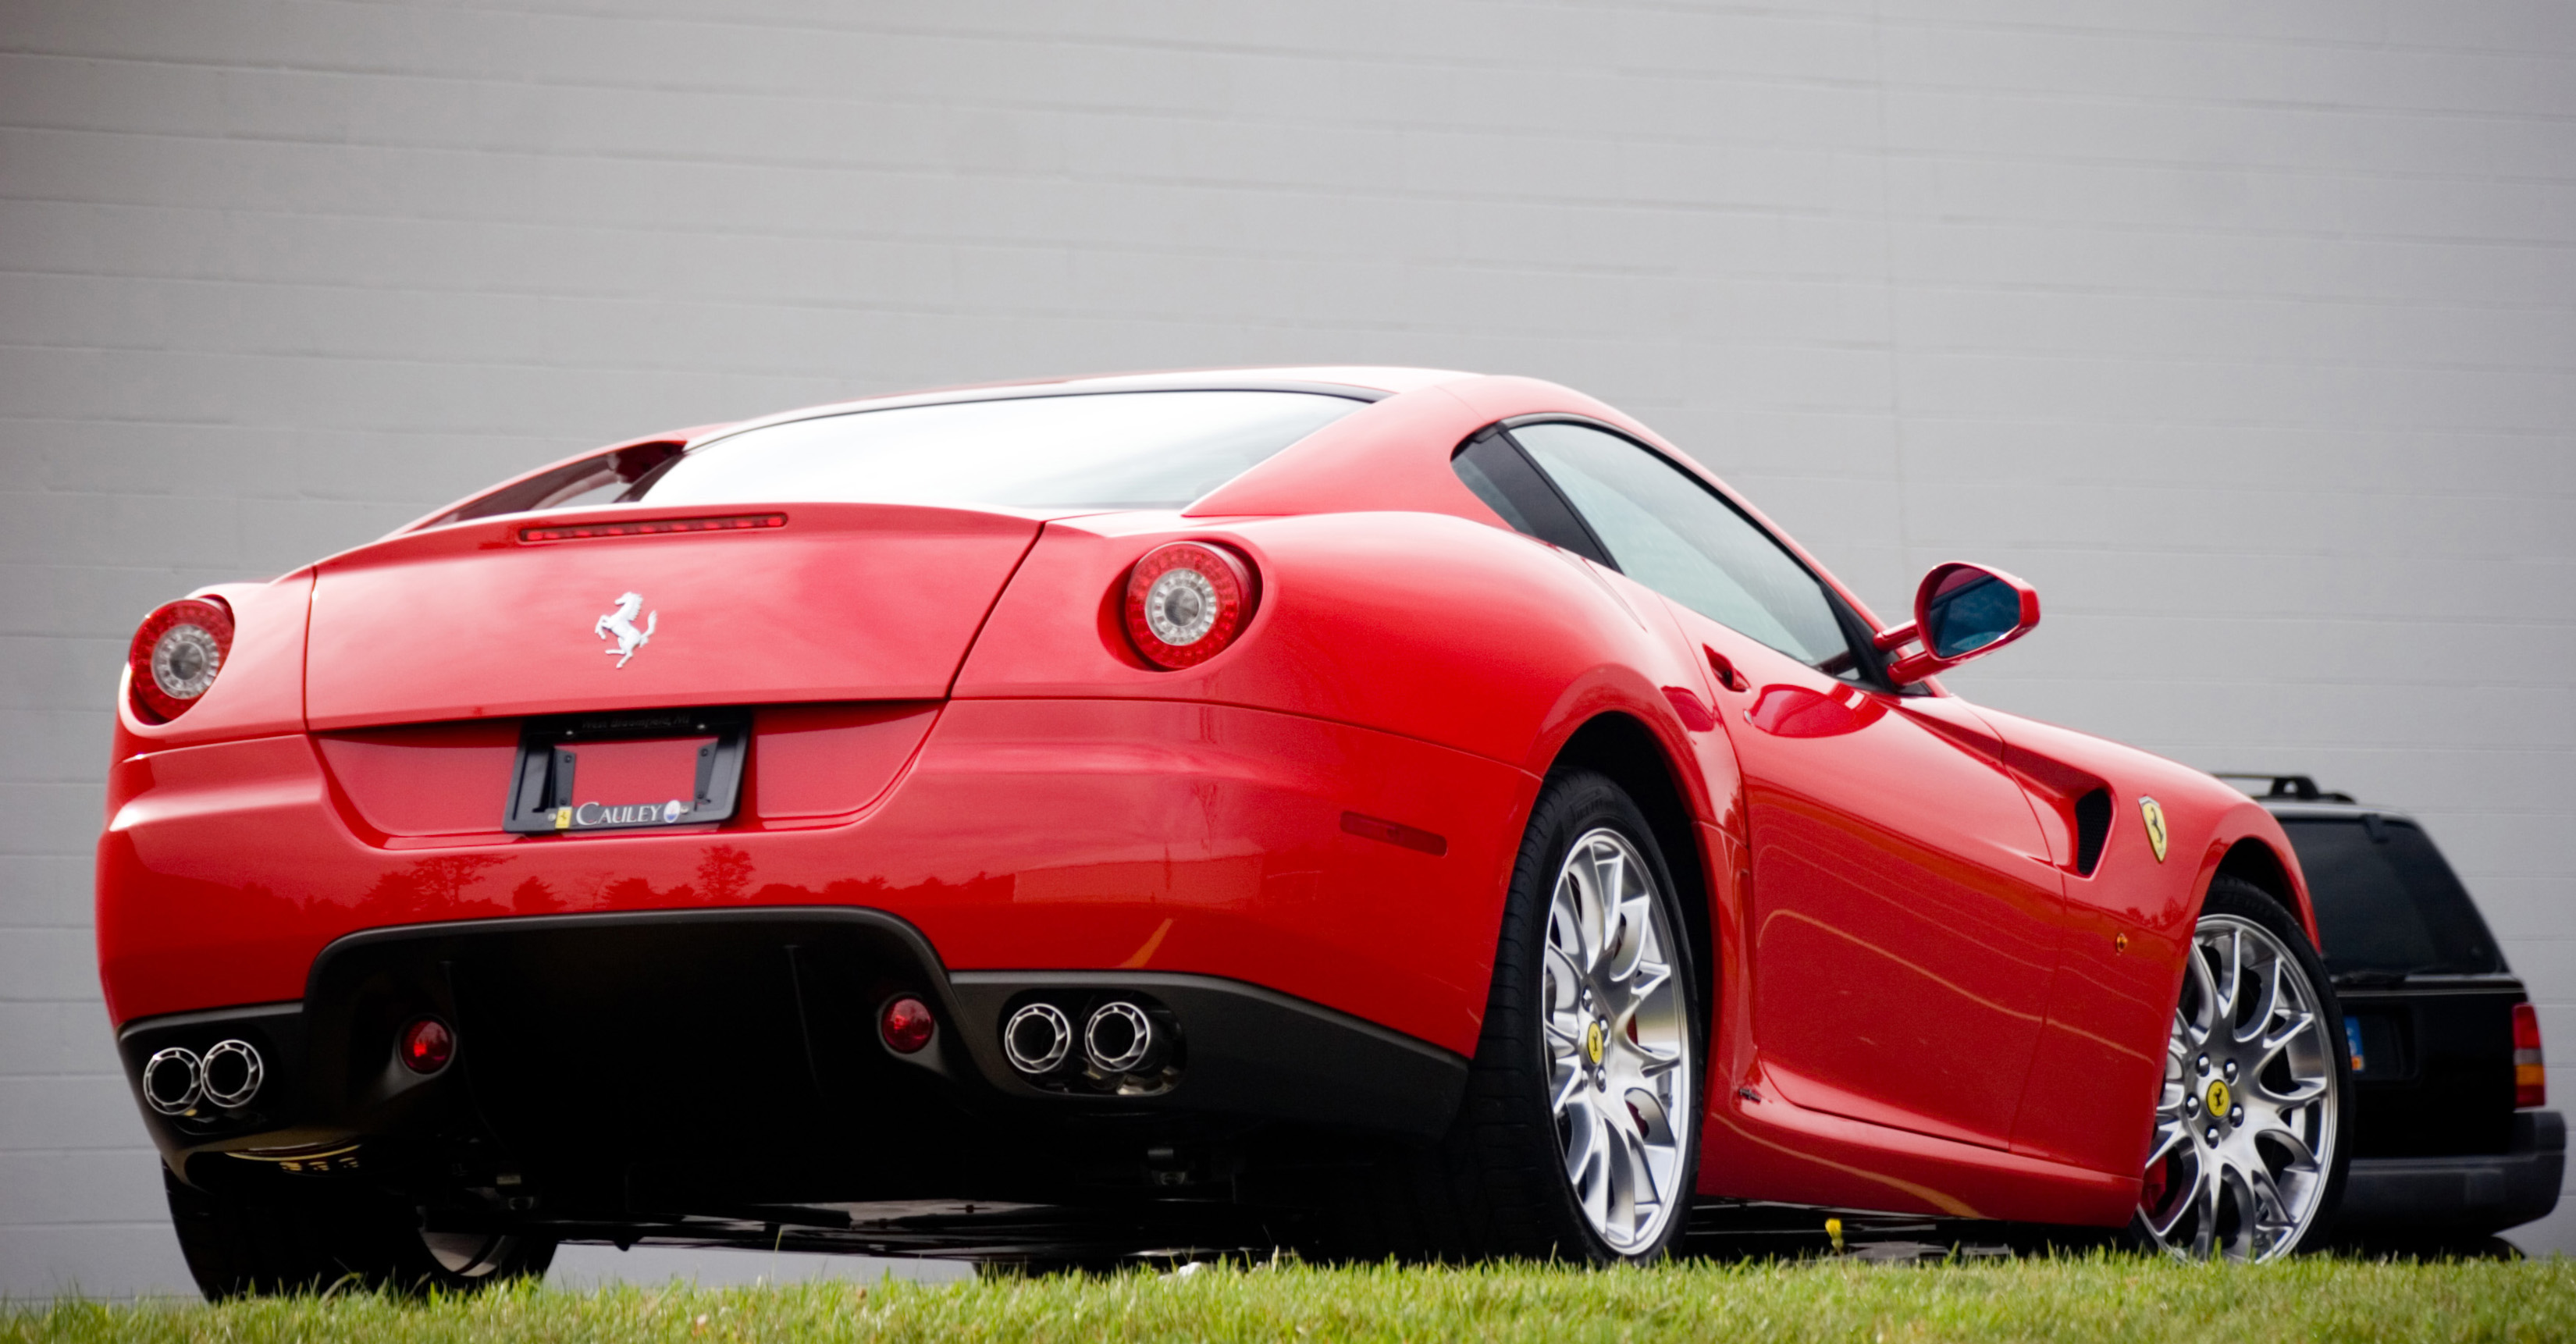 Los mejores fondos de pantalla de Ferrari 599 Gtb Fiorano para la pantalla del teléfono